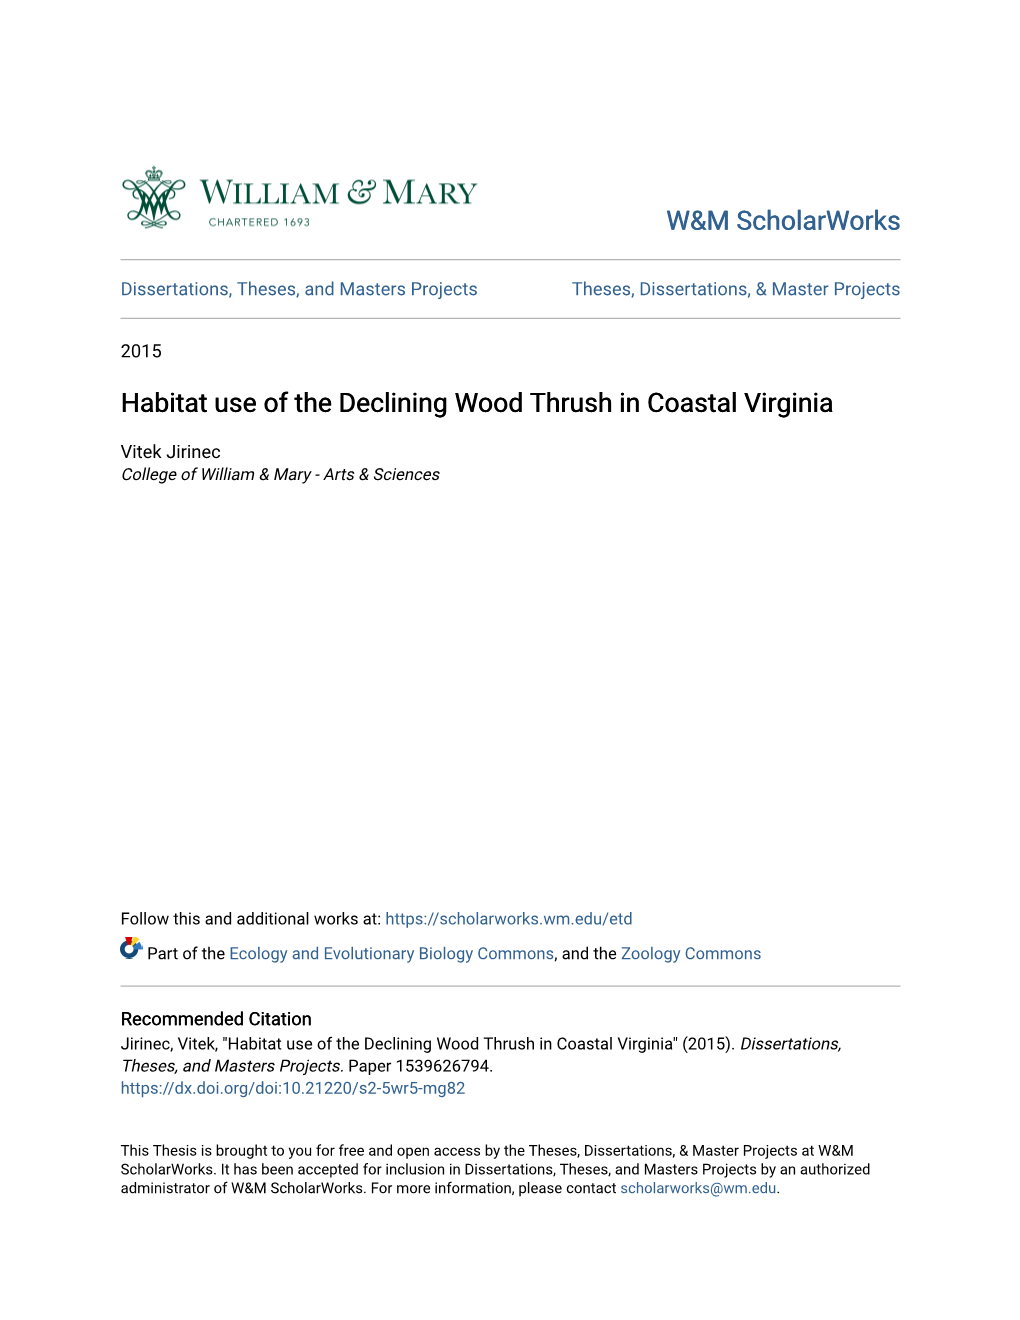 Habitat Use of the Declining Wood Thrush in Coastal Virginia